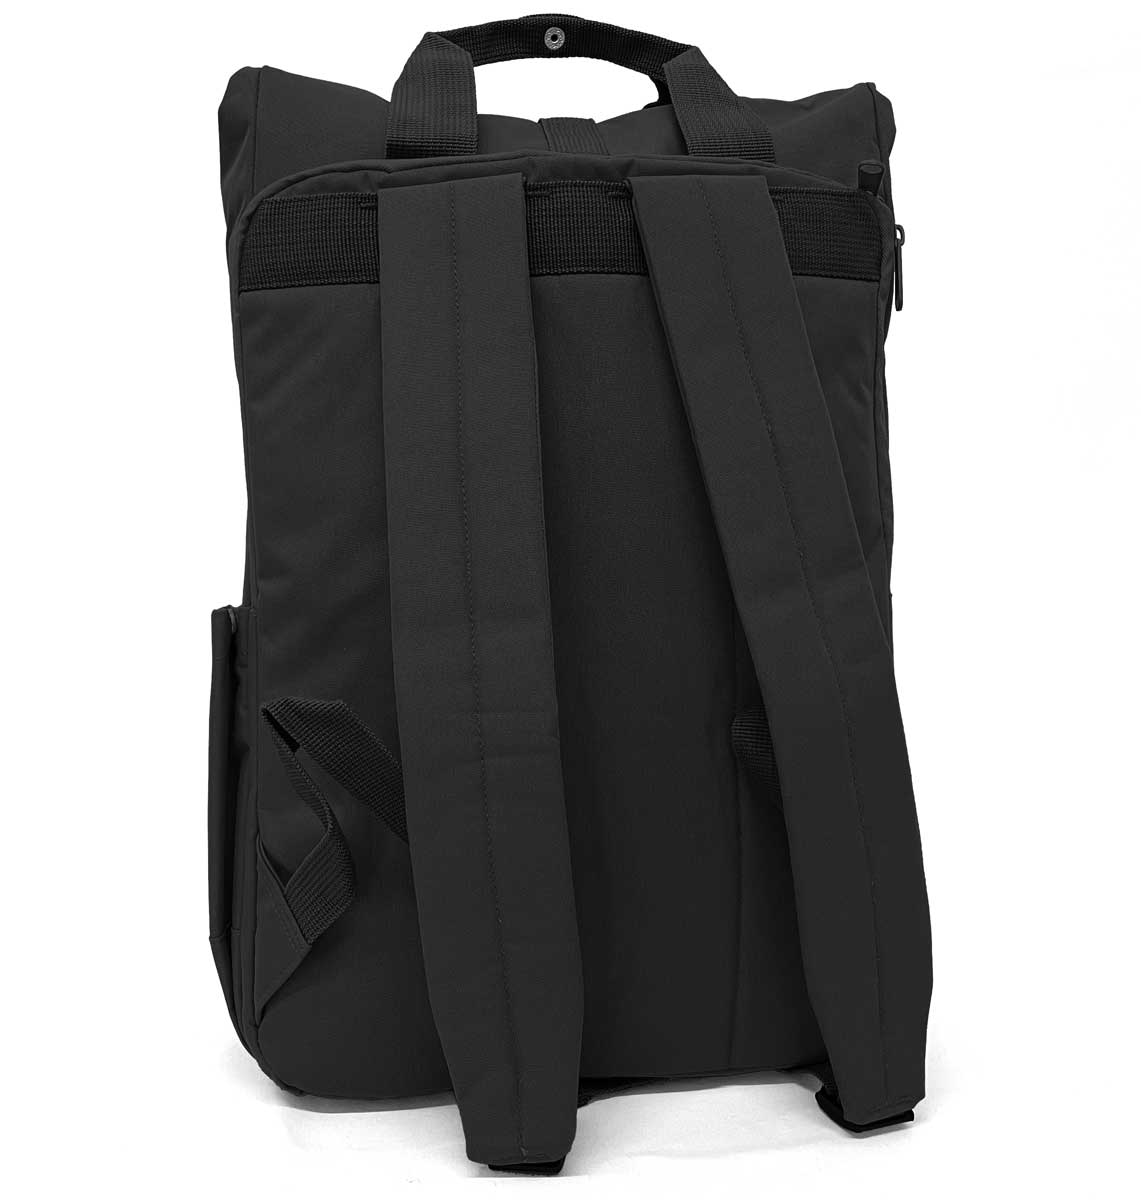 Corgi Roll-top Laptop Recycled Backpack - Blue Panda